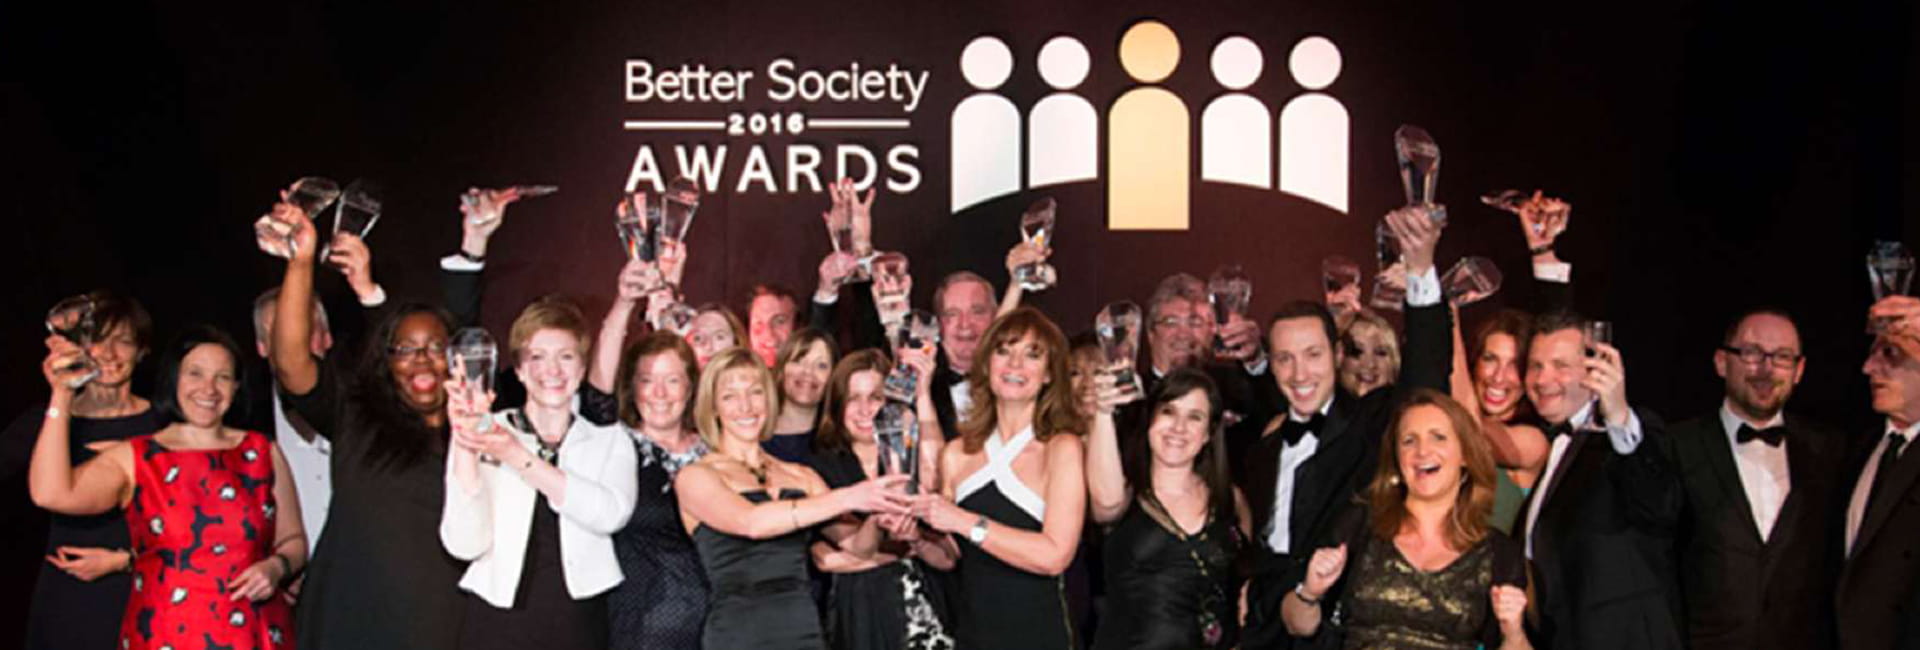 Better Society Awards